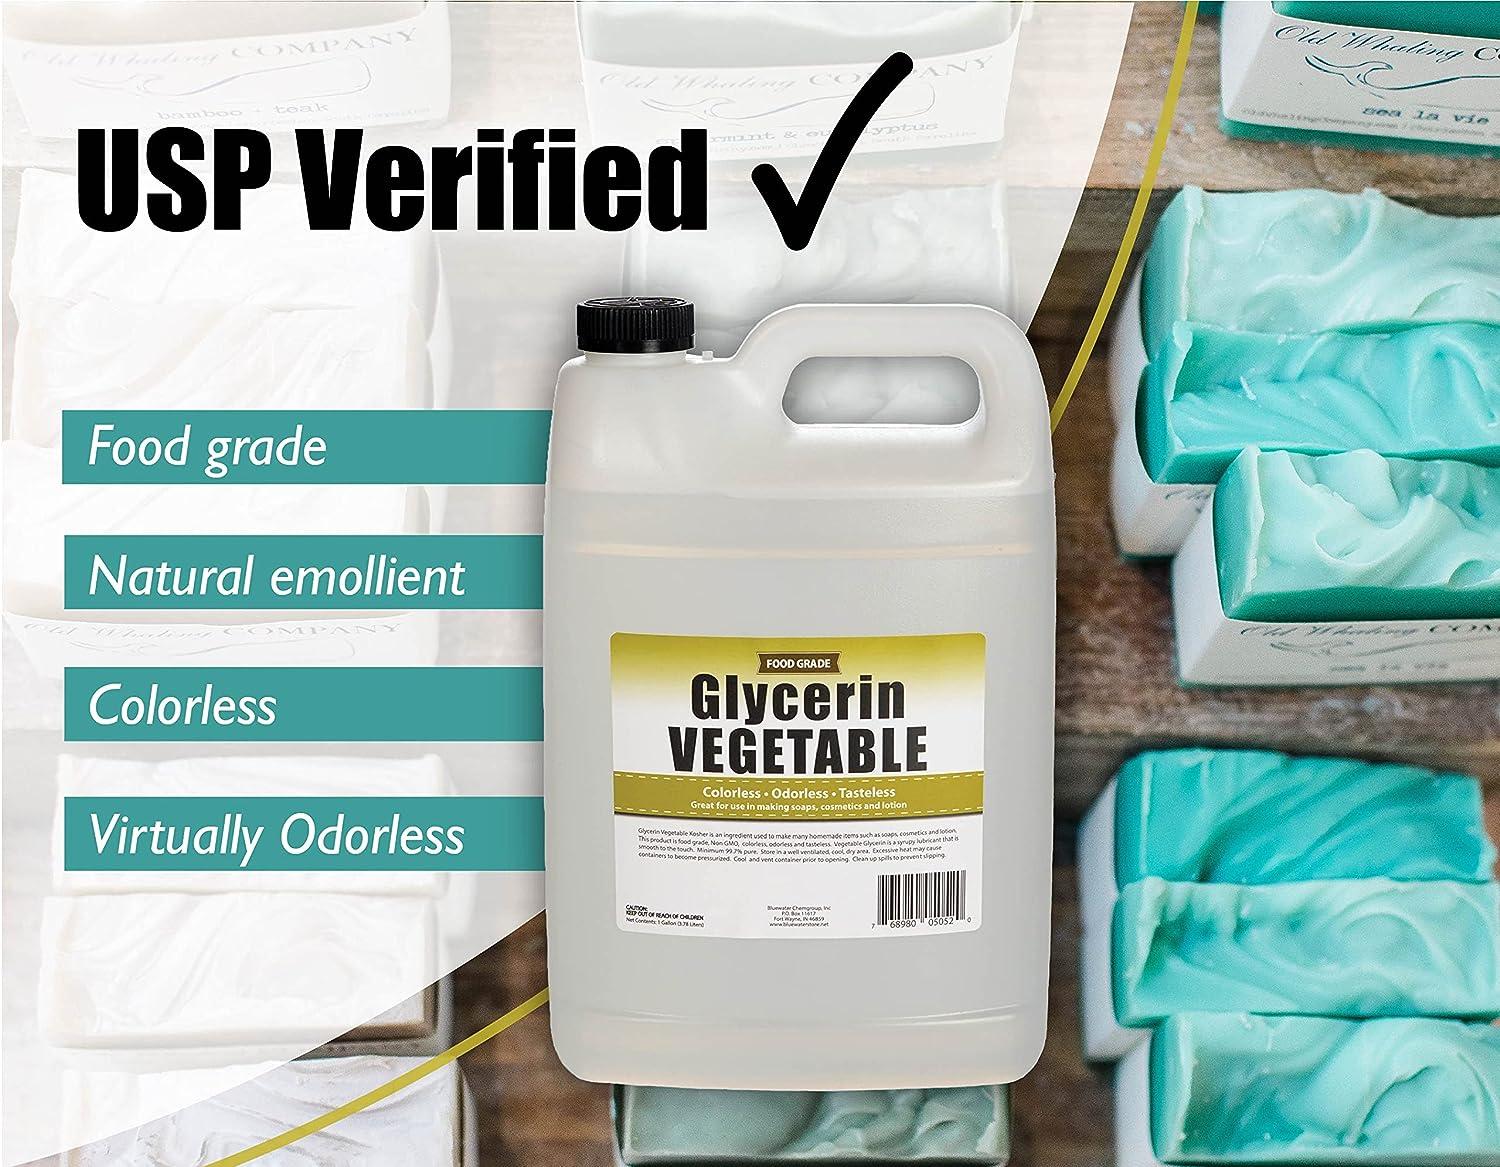 Quality Chemical Company - Glycerin - USP Food Grade